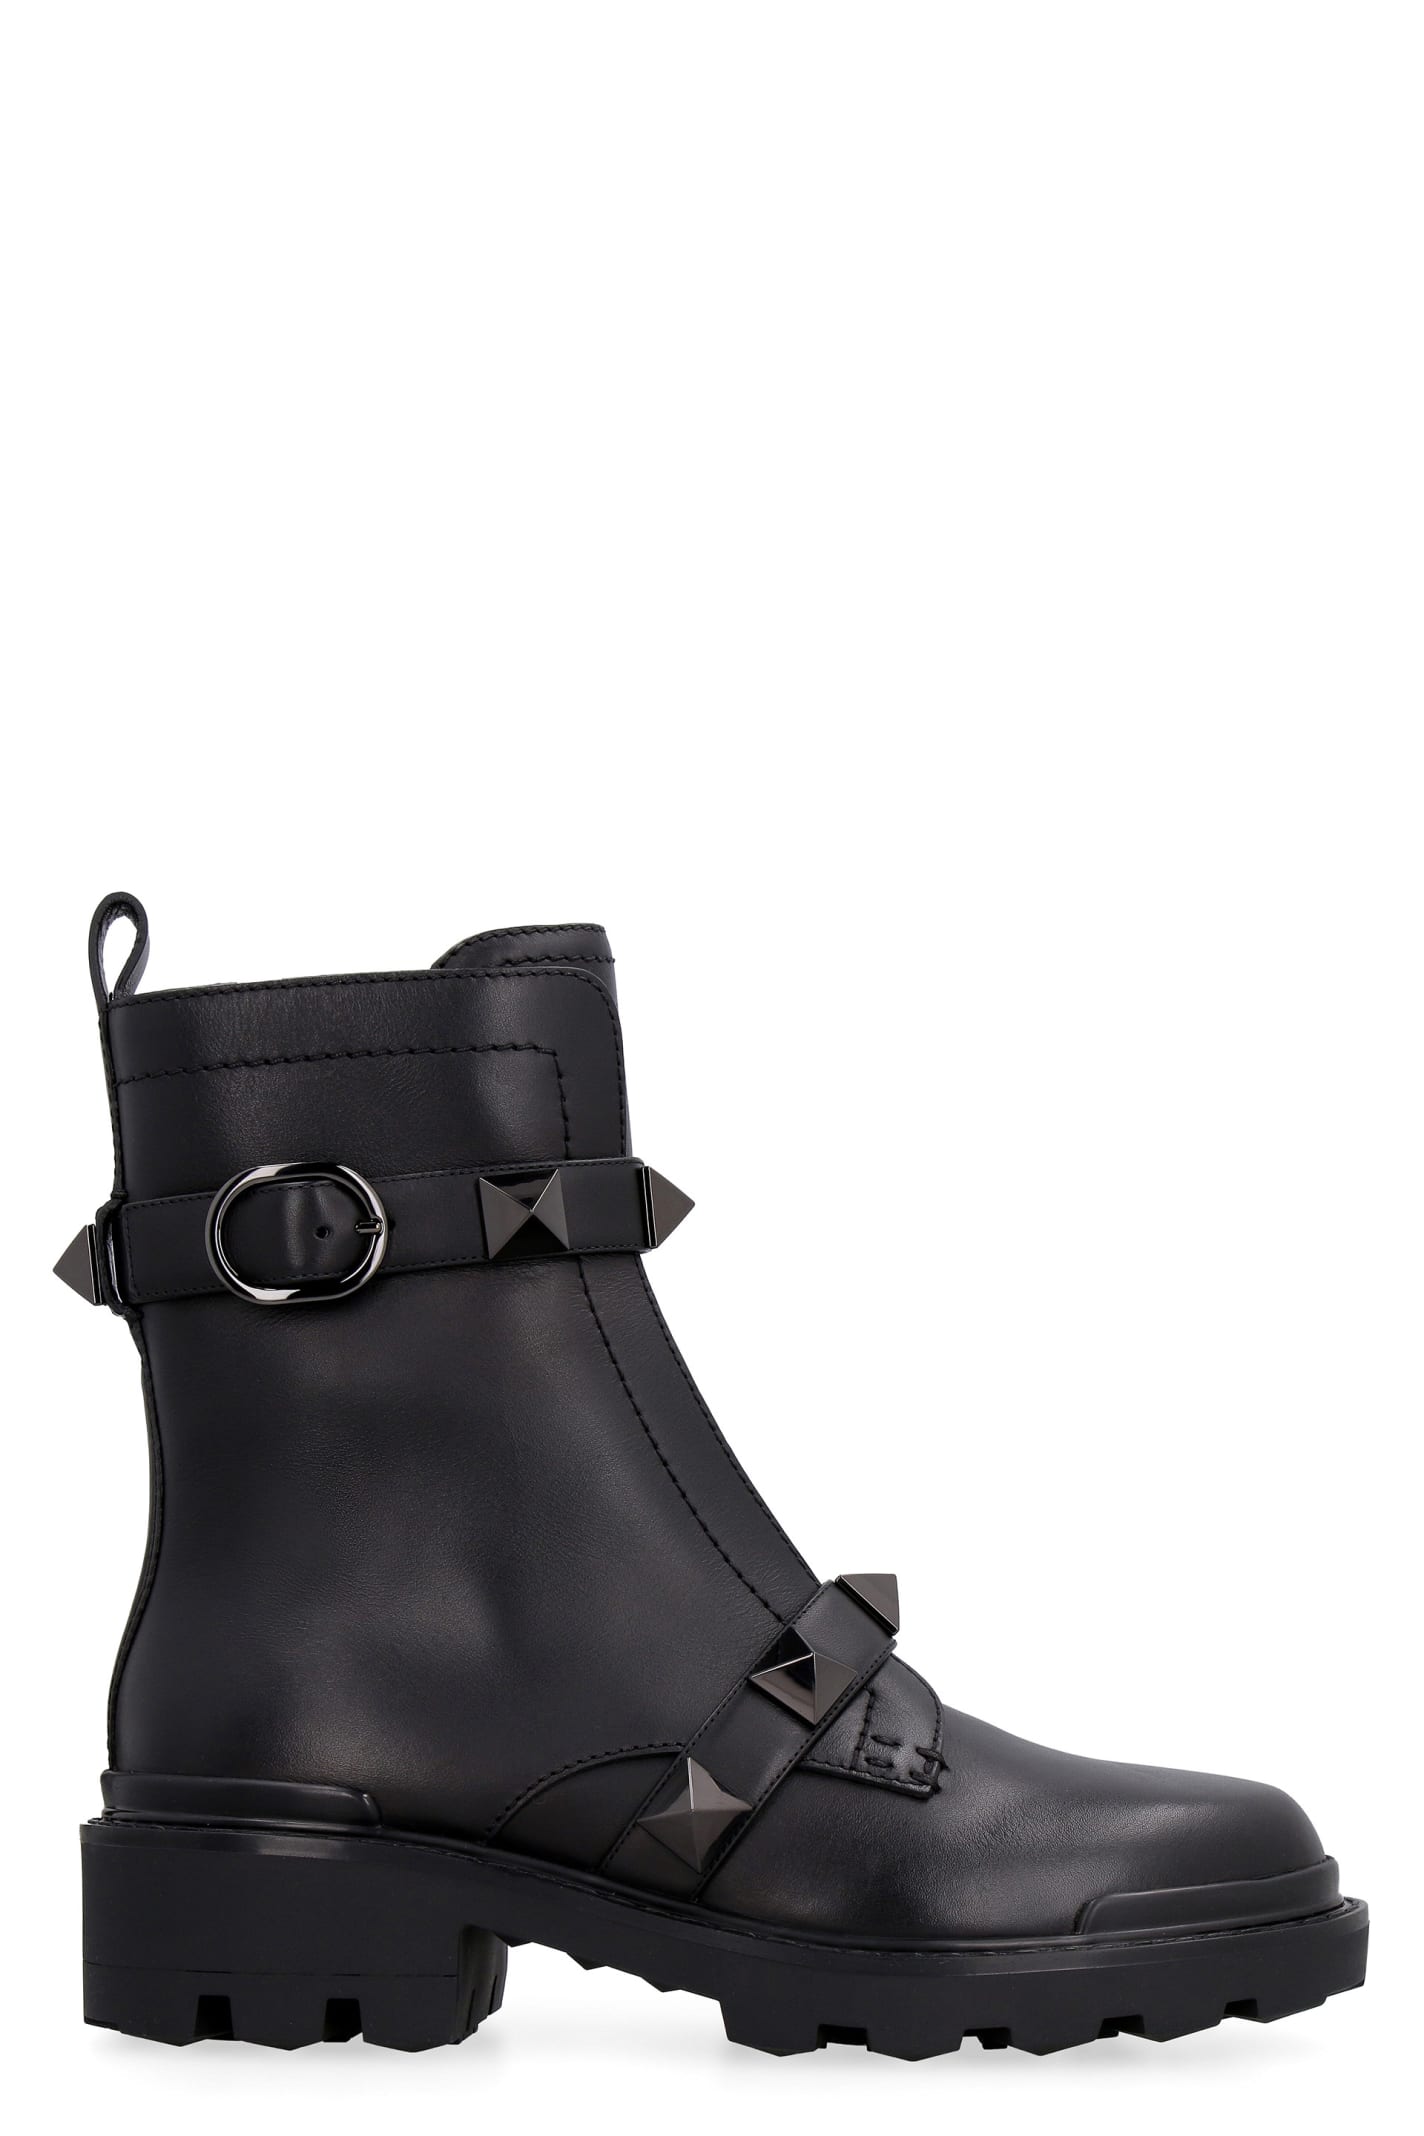 Valentino Garavani - Roman Stud Leather Ankle Boots